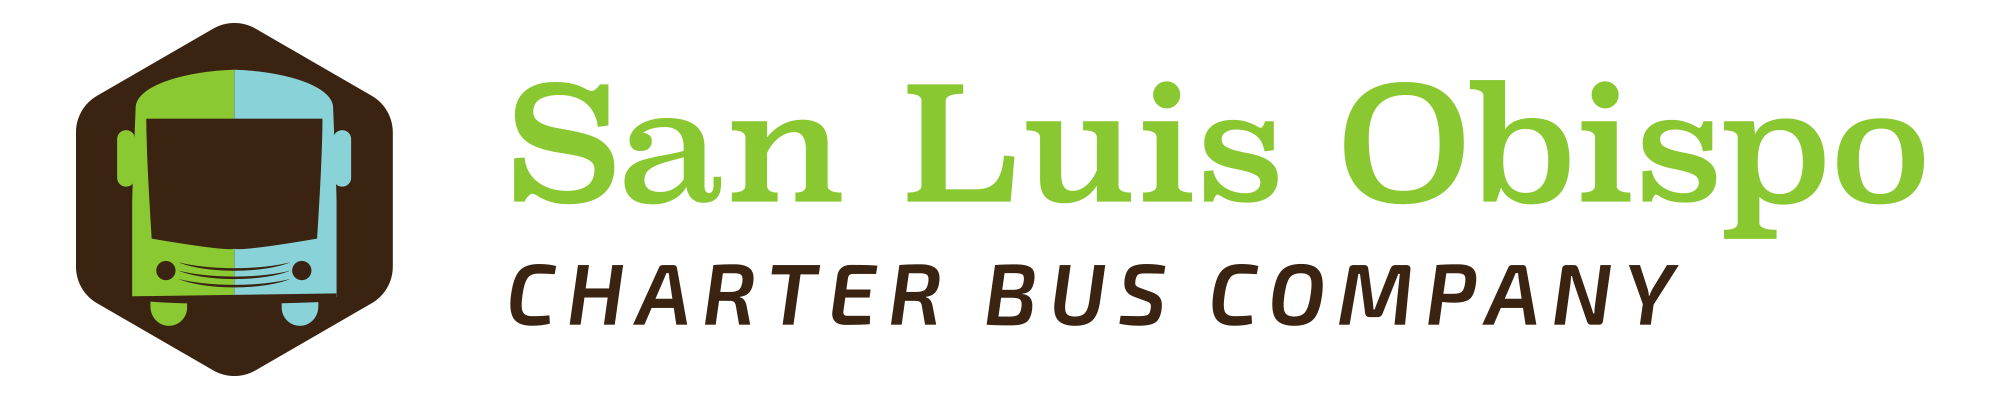 San Luis Obispo charter bus